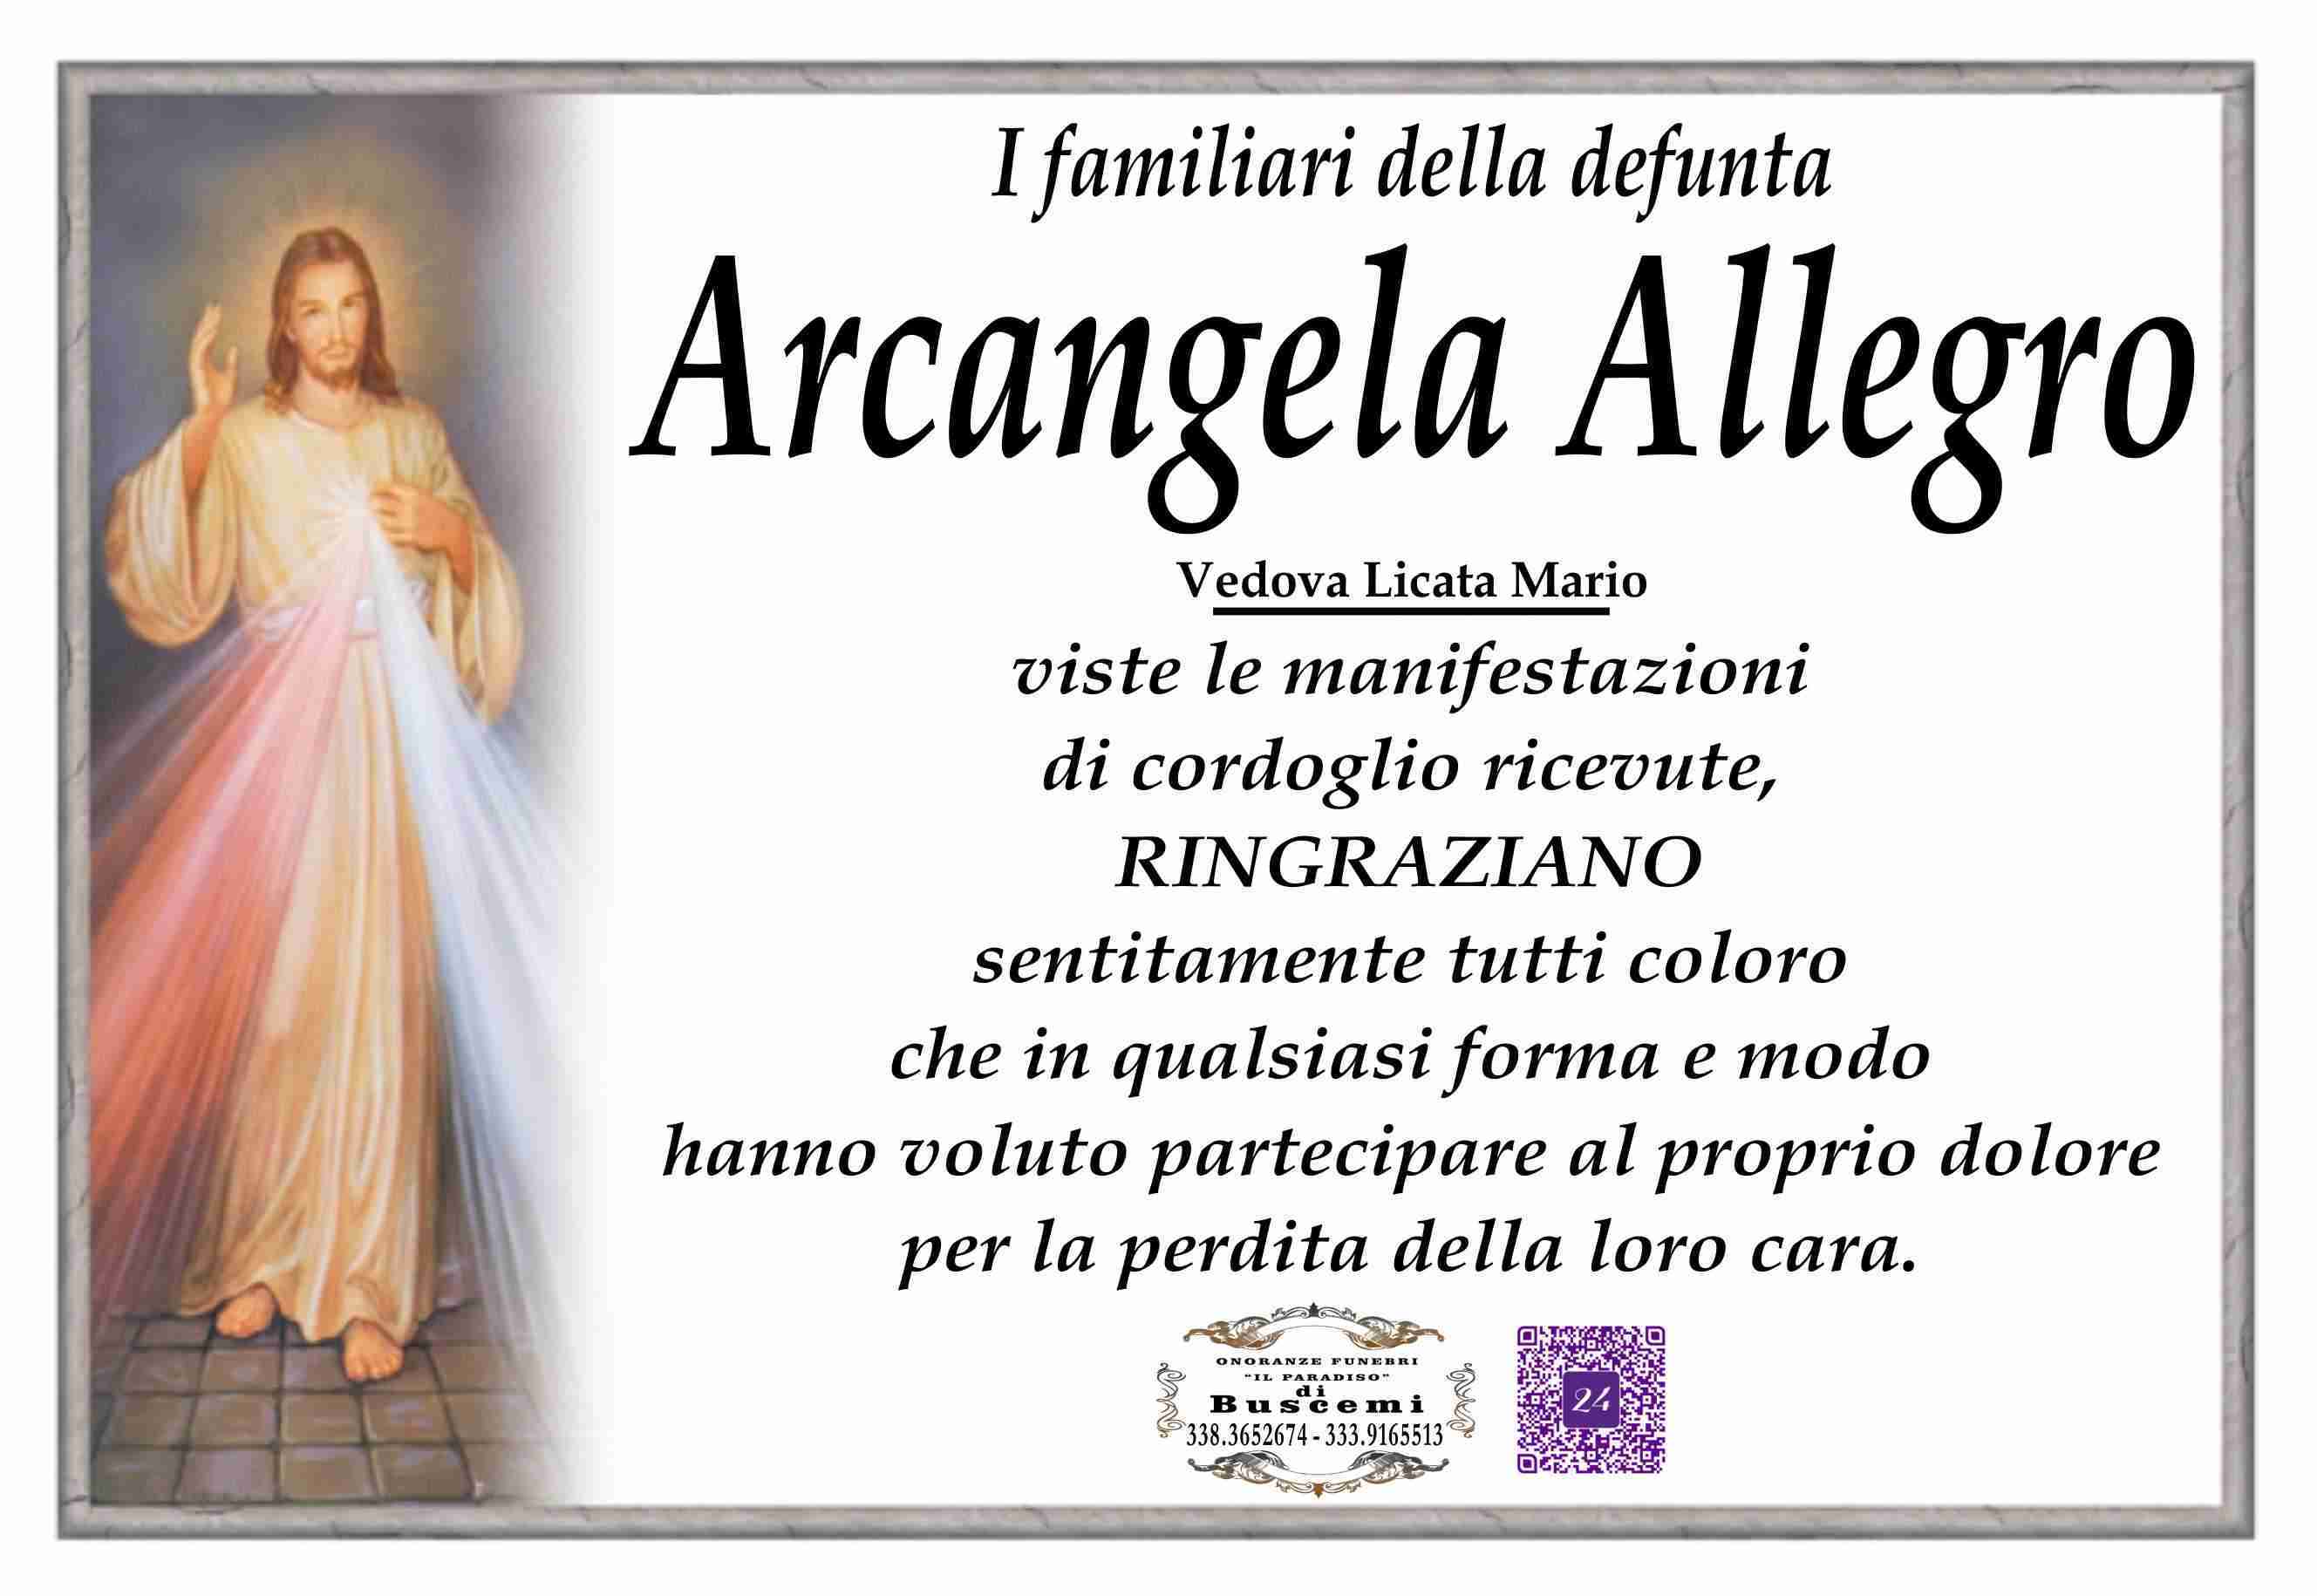 Arcangela Allegro